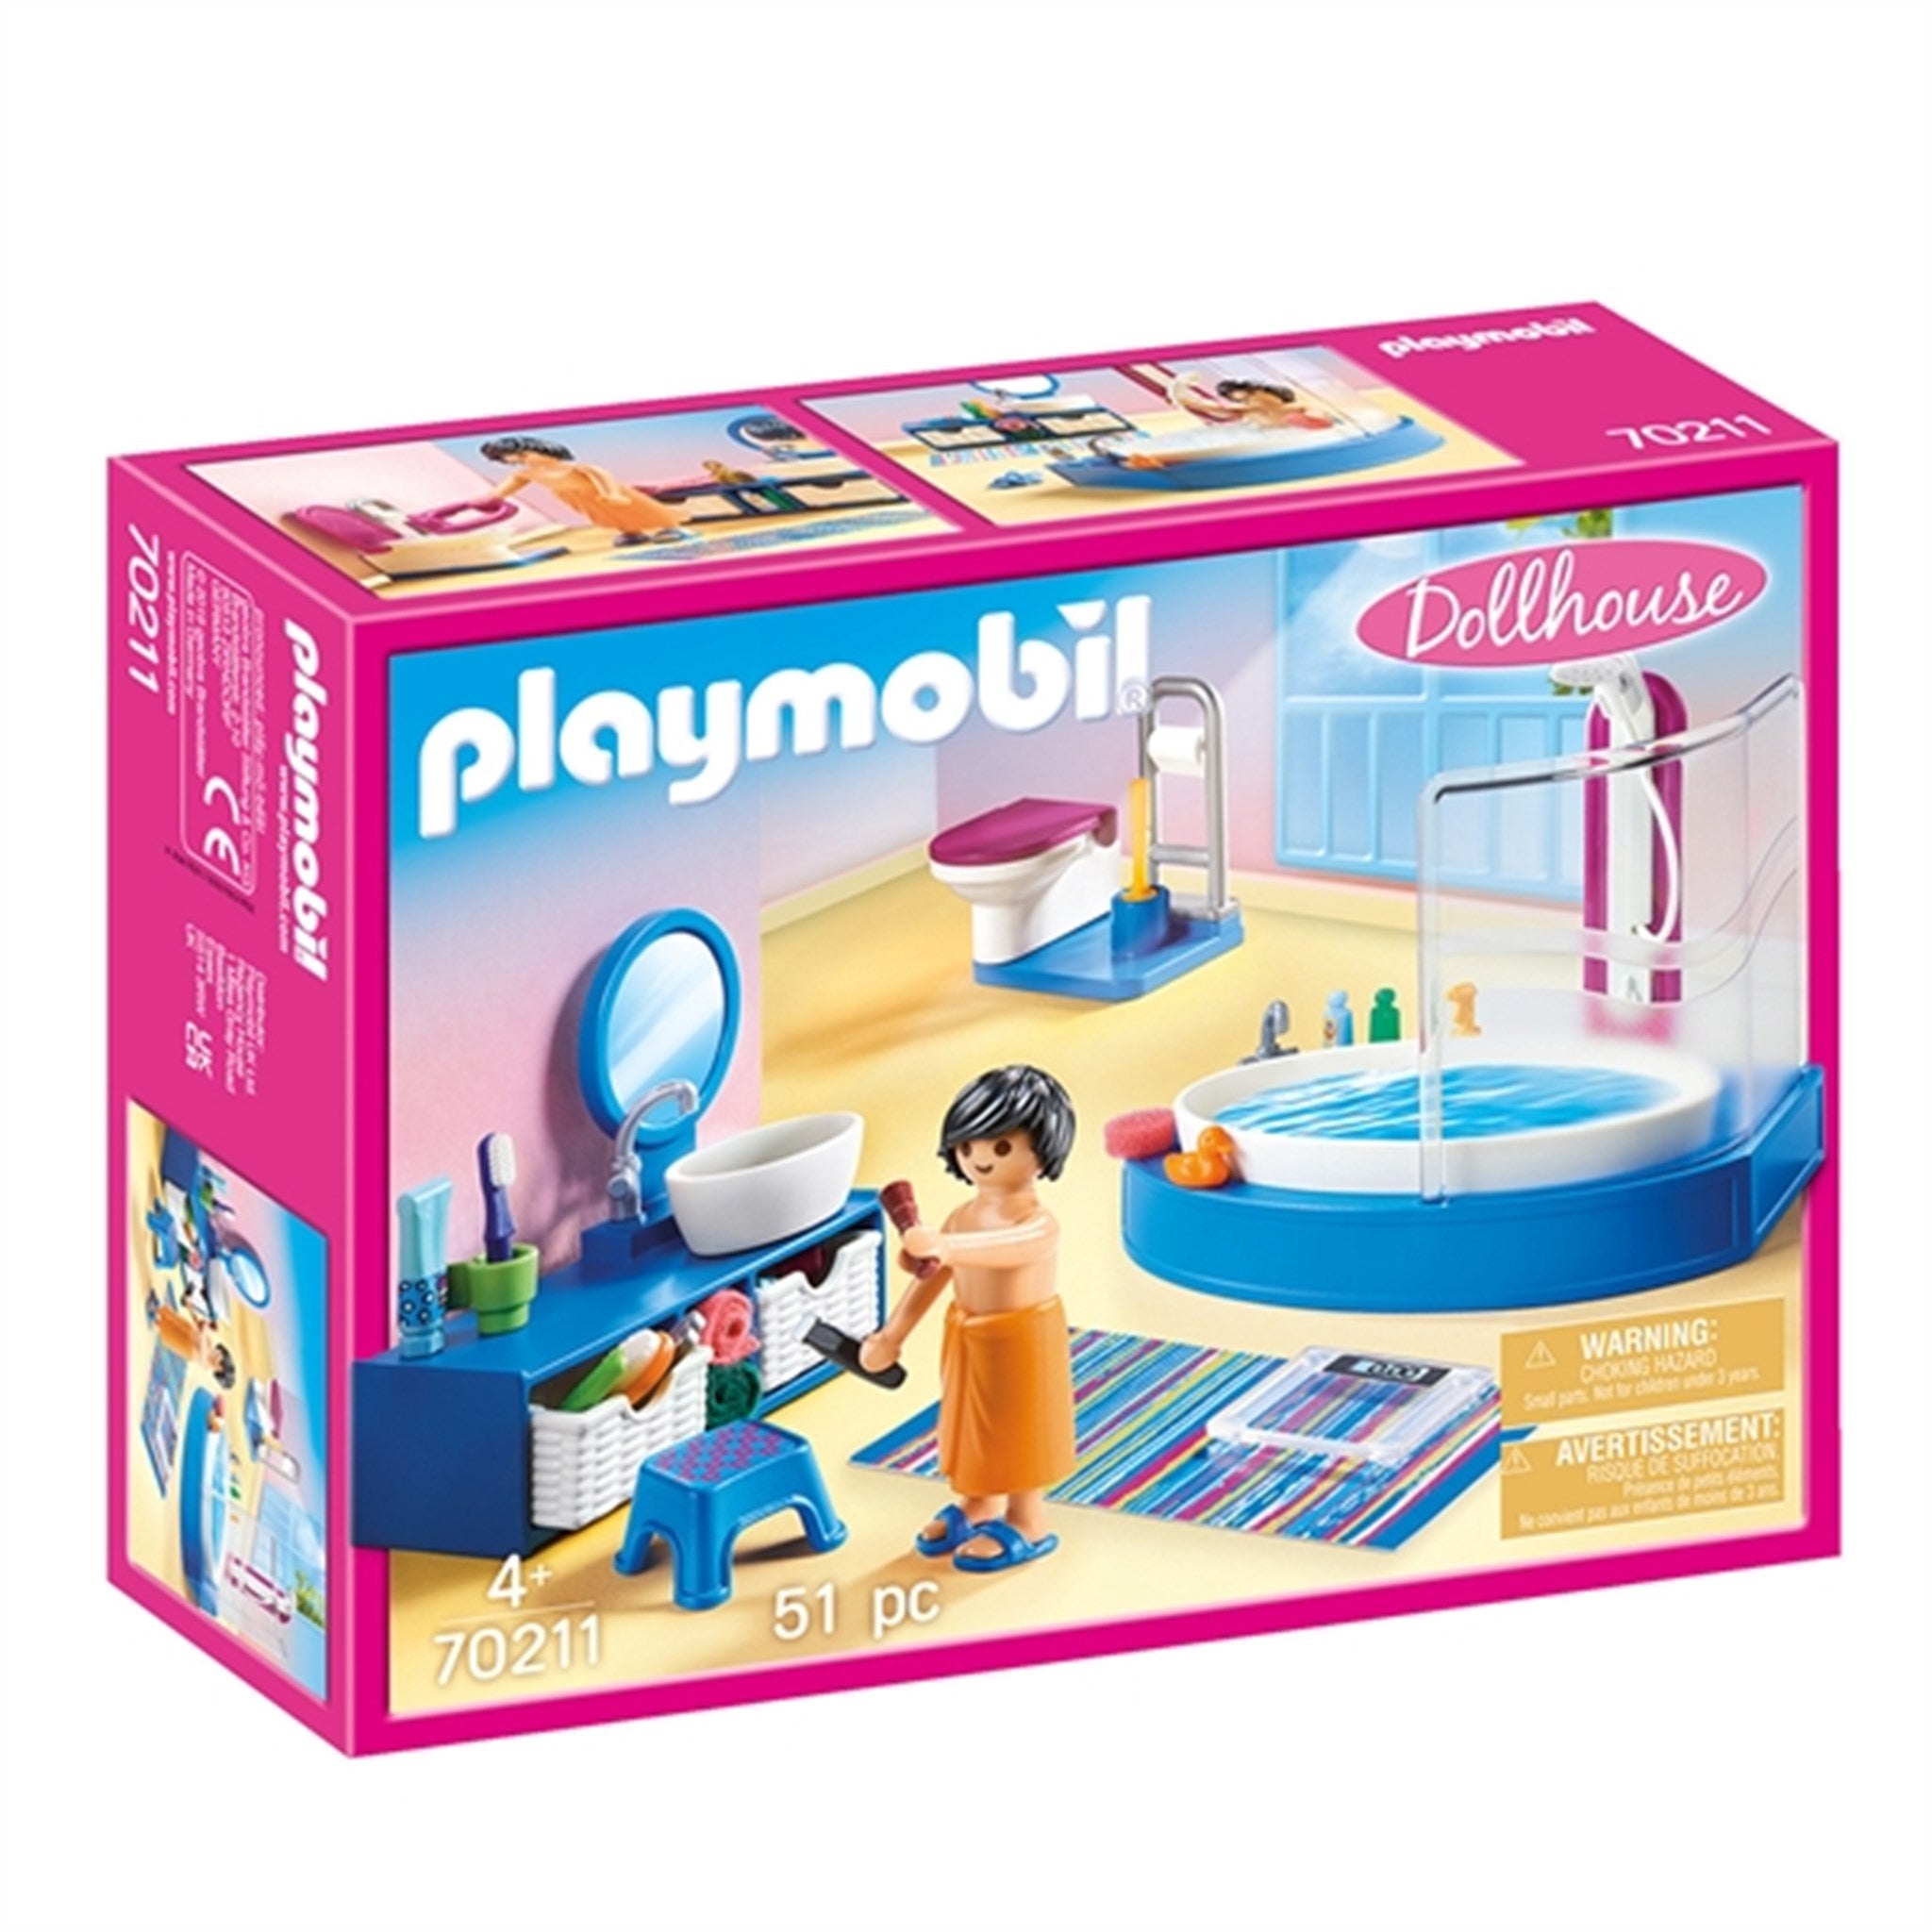 Playmobil® Dollhouse - Bathroom with Tub